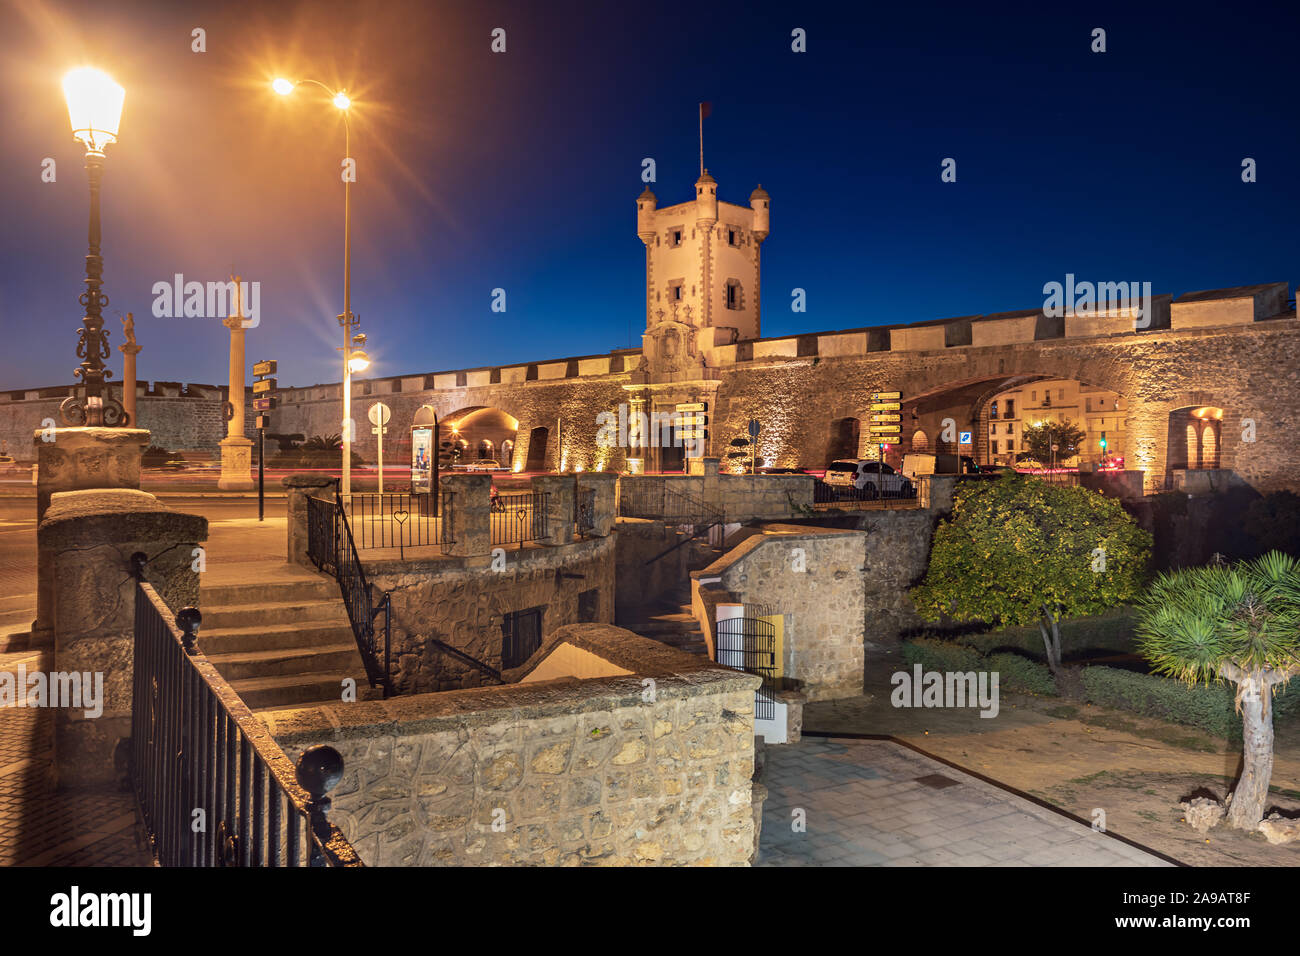 CADIZ, SPAIN - CIRCA NOVEMBER, 2019:  The Puertas de Tierra gate and townwall of Cadiz in Andalusia, Spain Stock Photo